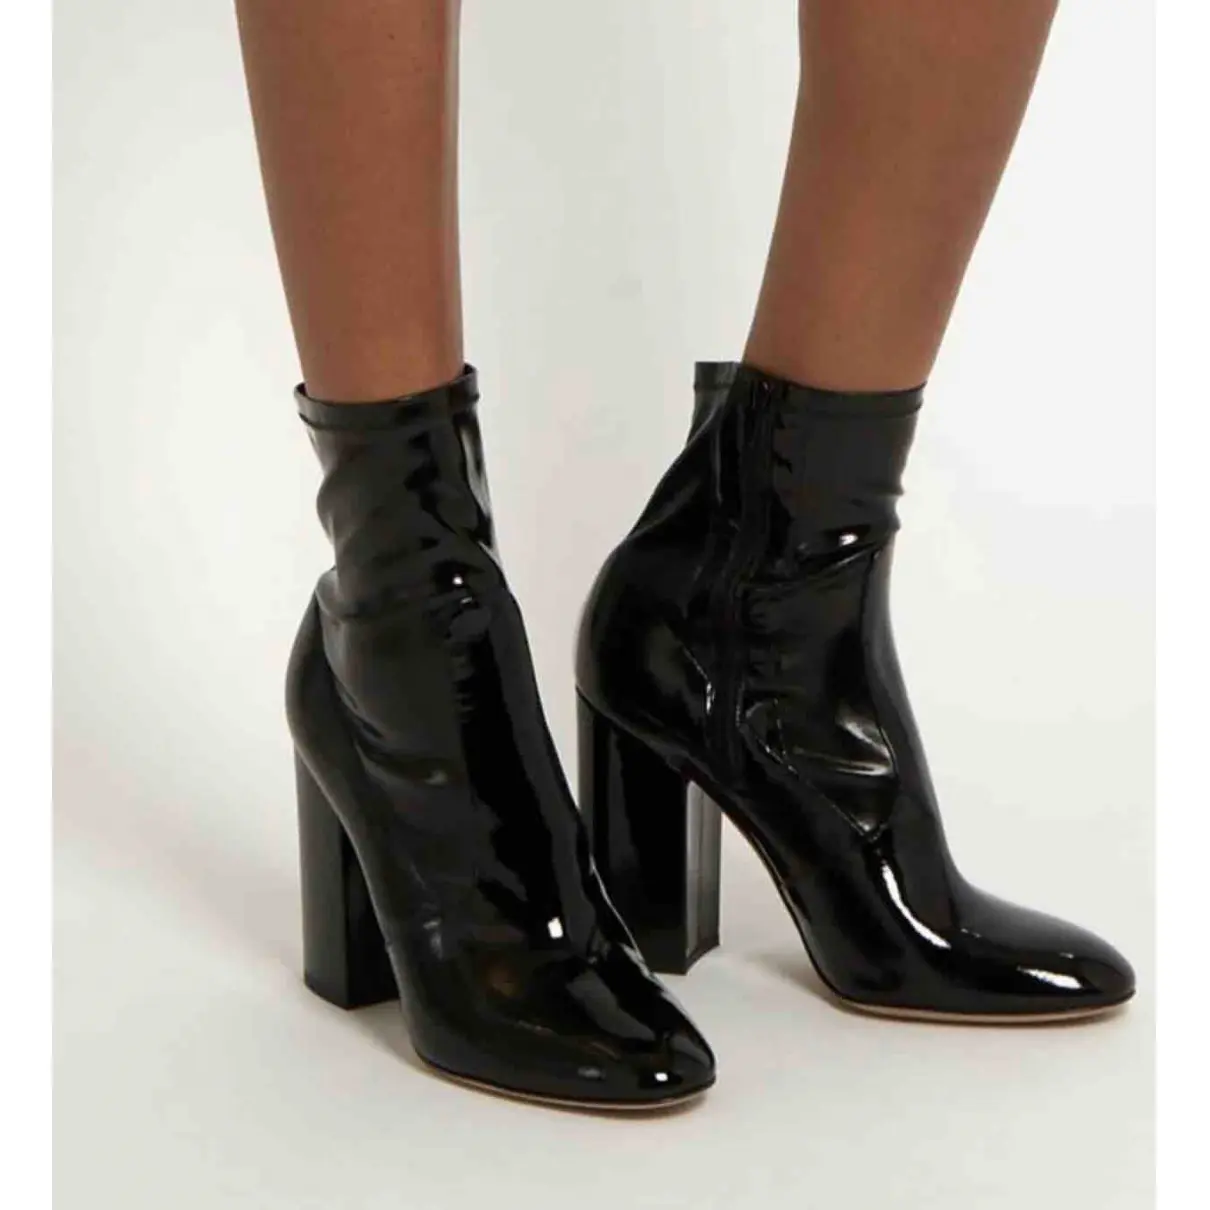 Buy Valentino Garavani Patent leather boots online